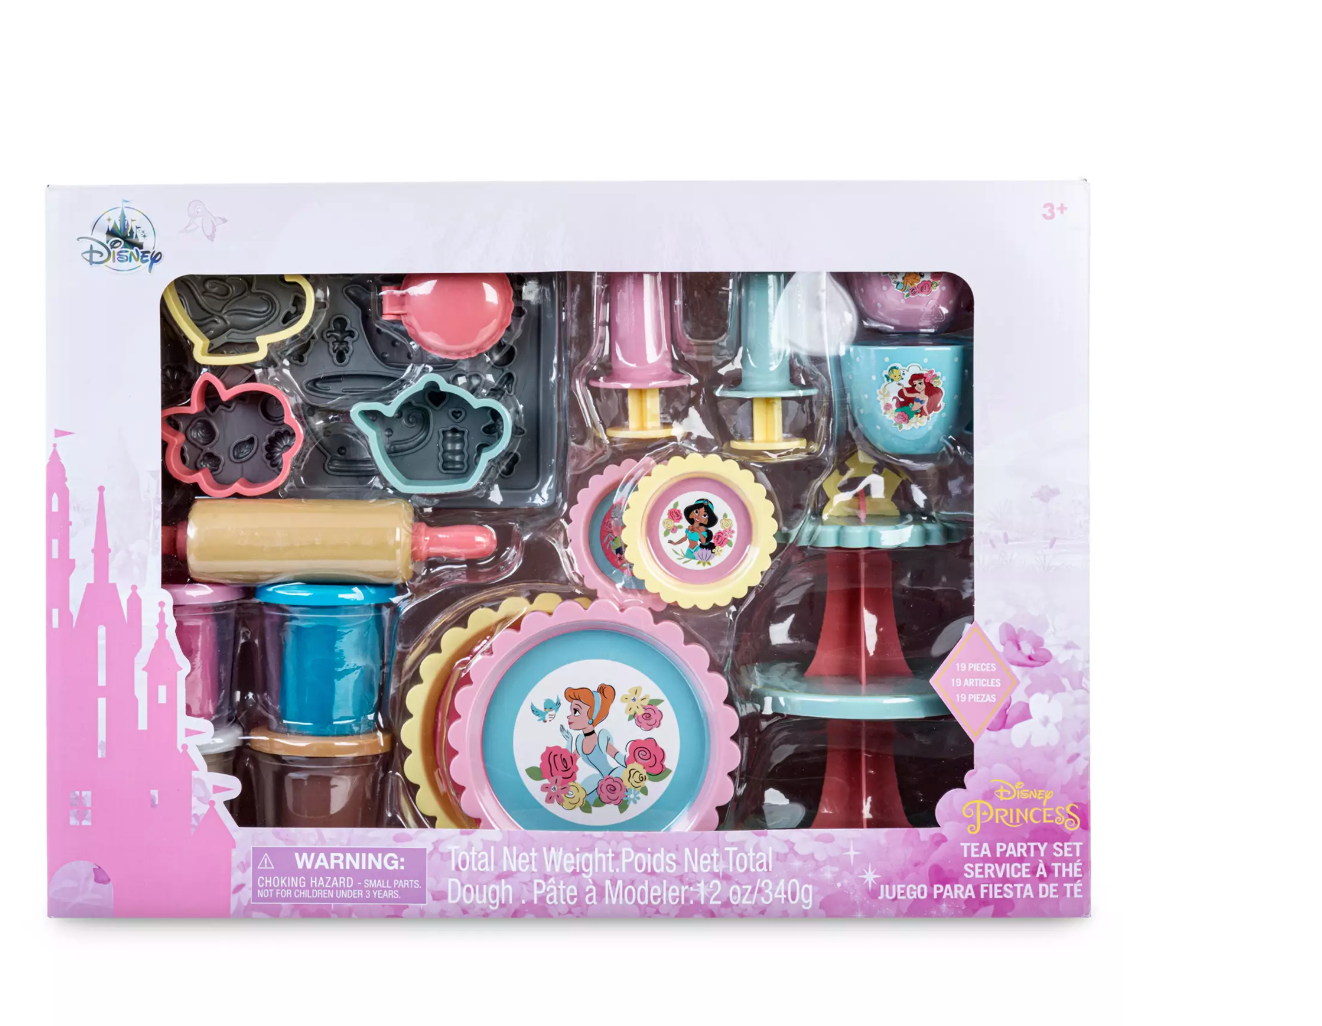 Disney Princess Cinderella Ariel Belle and Tiana Tea Party Set Toy New with Box